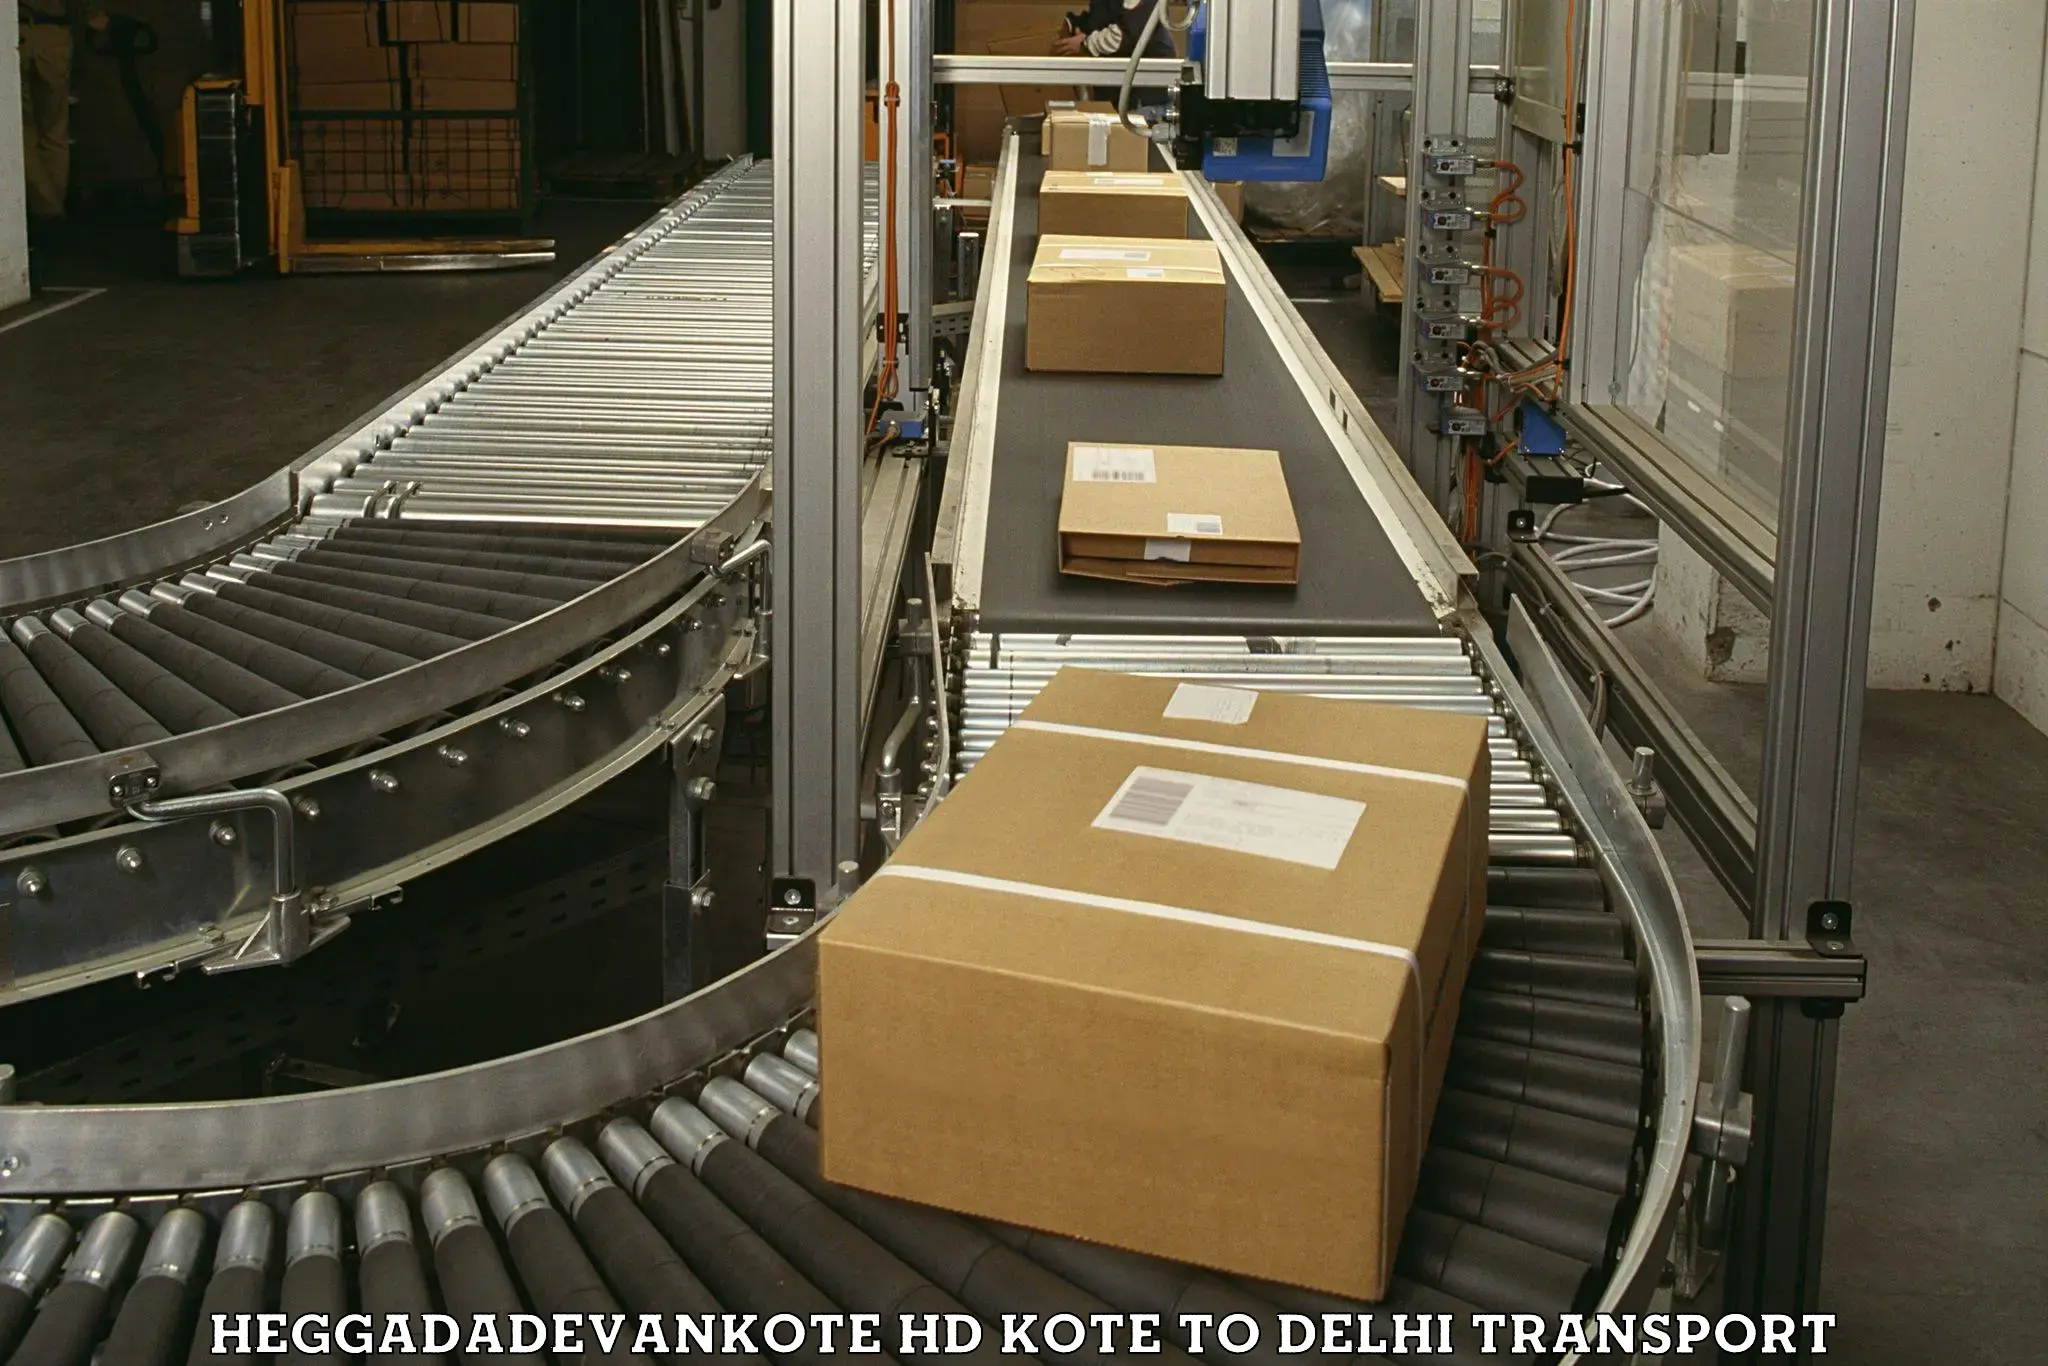 Logistics transportation services Heggadadevankote HD Kote to Kalkaji